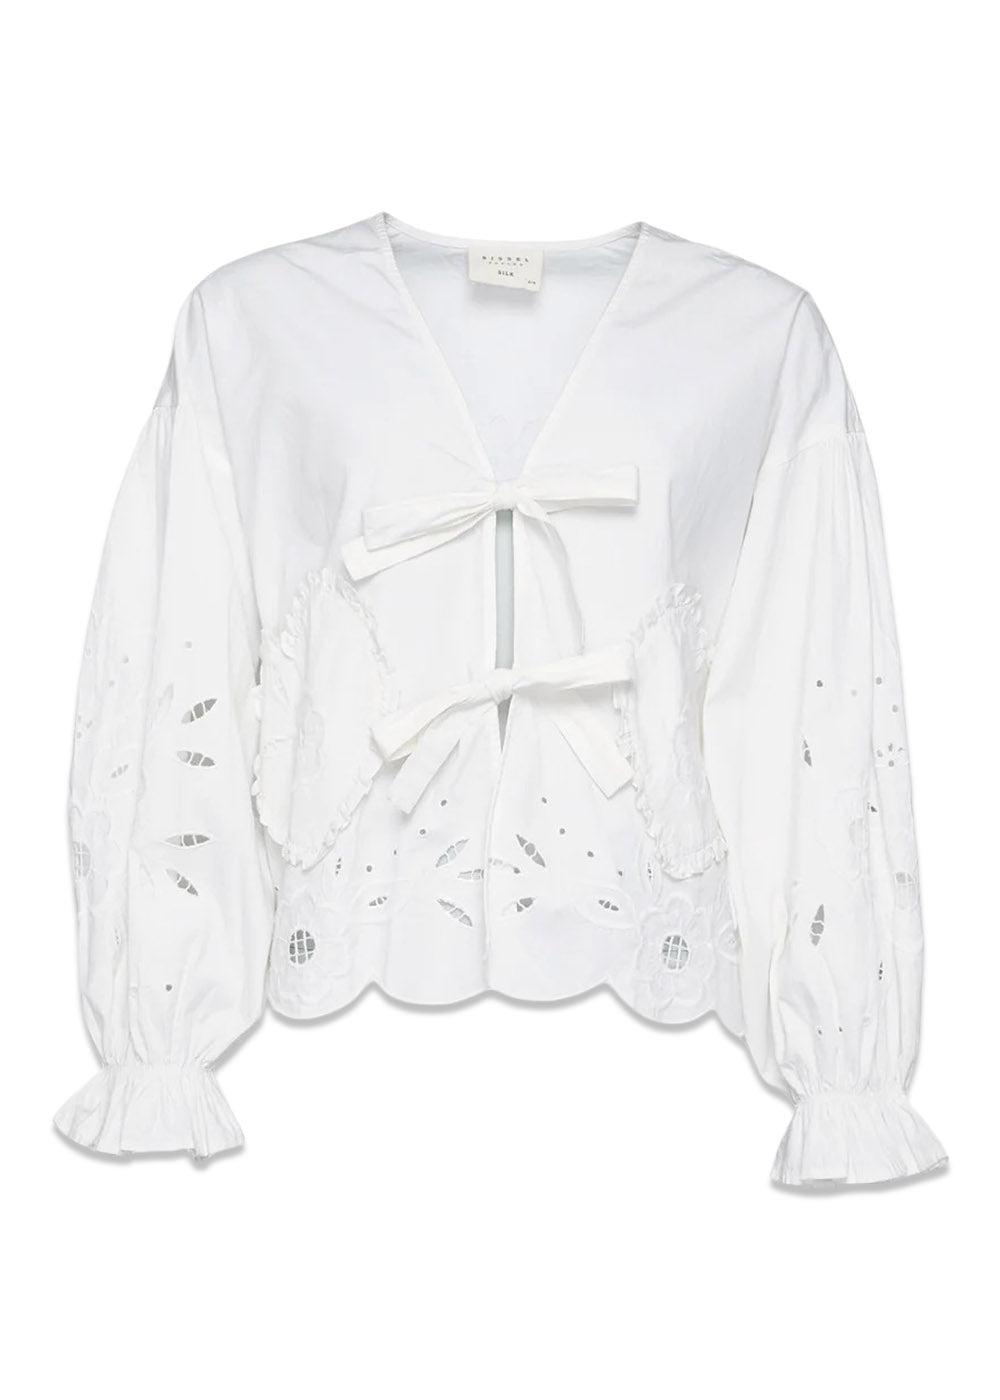 Sissel Edelbos Maibritt Organic Cotton Top - Ecru. Køb blouses her.